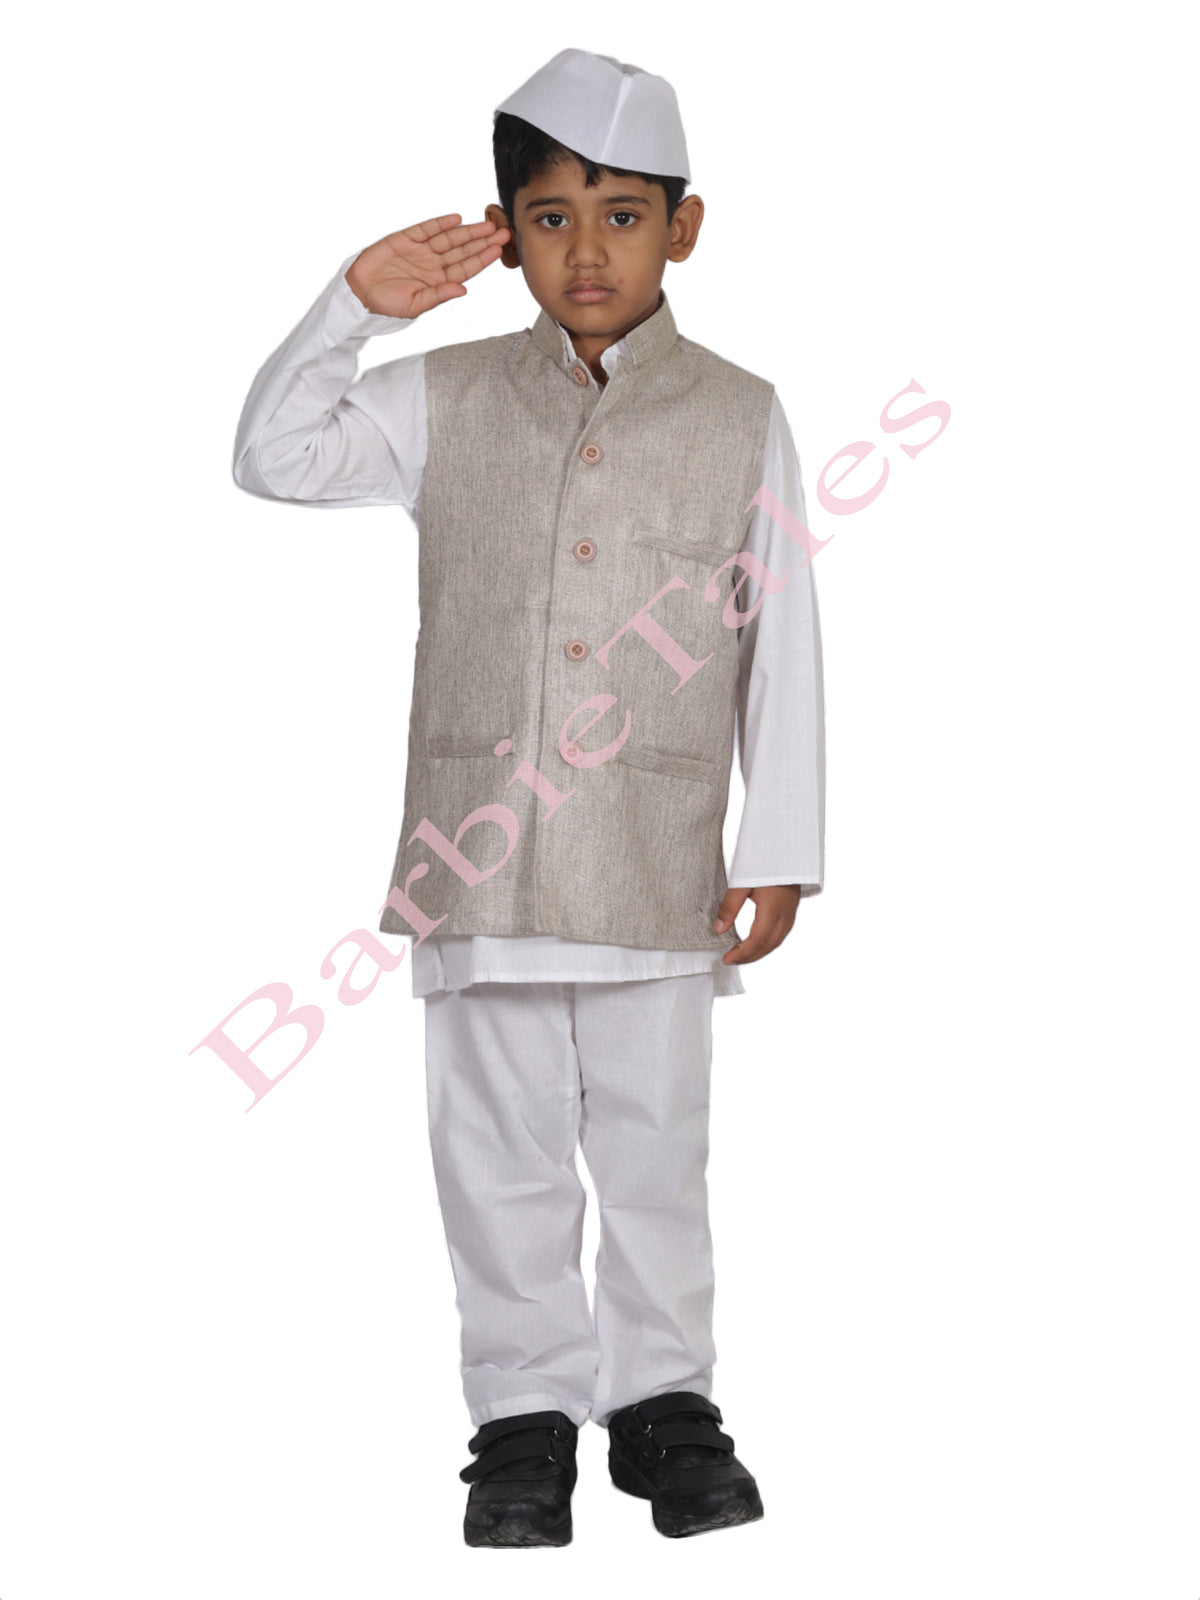 KAKU FANCY DRESSES National Hero/ Freedom Figter Lal Bahadur Shastri Costume  -White, 5-6 Years, For Boys Kids Costume Wear Price in India - Buy KAKU FANCY  DRESSES National Hero/ Freedom Figter Lal